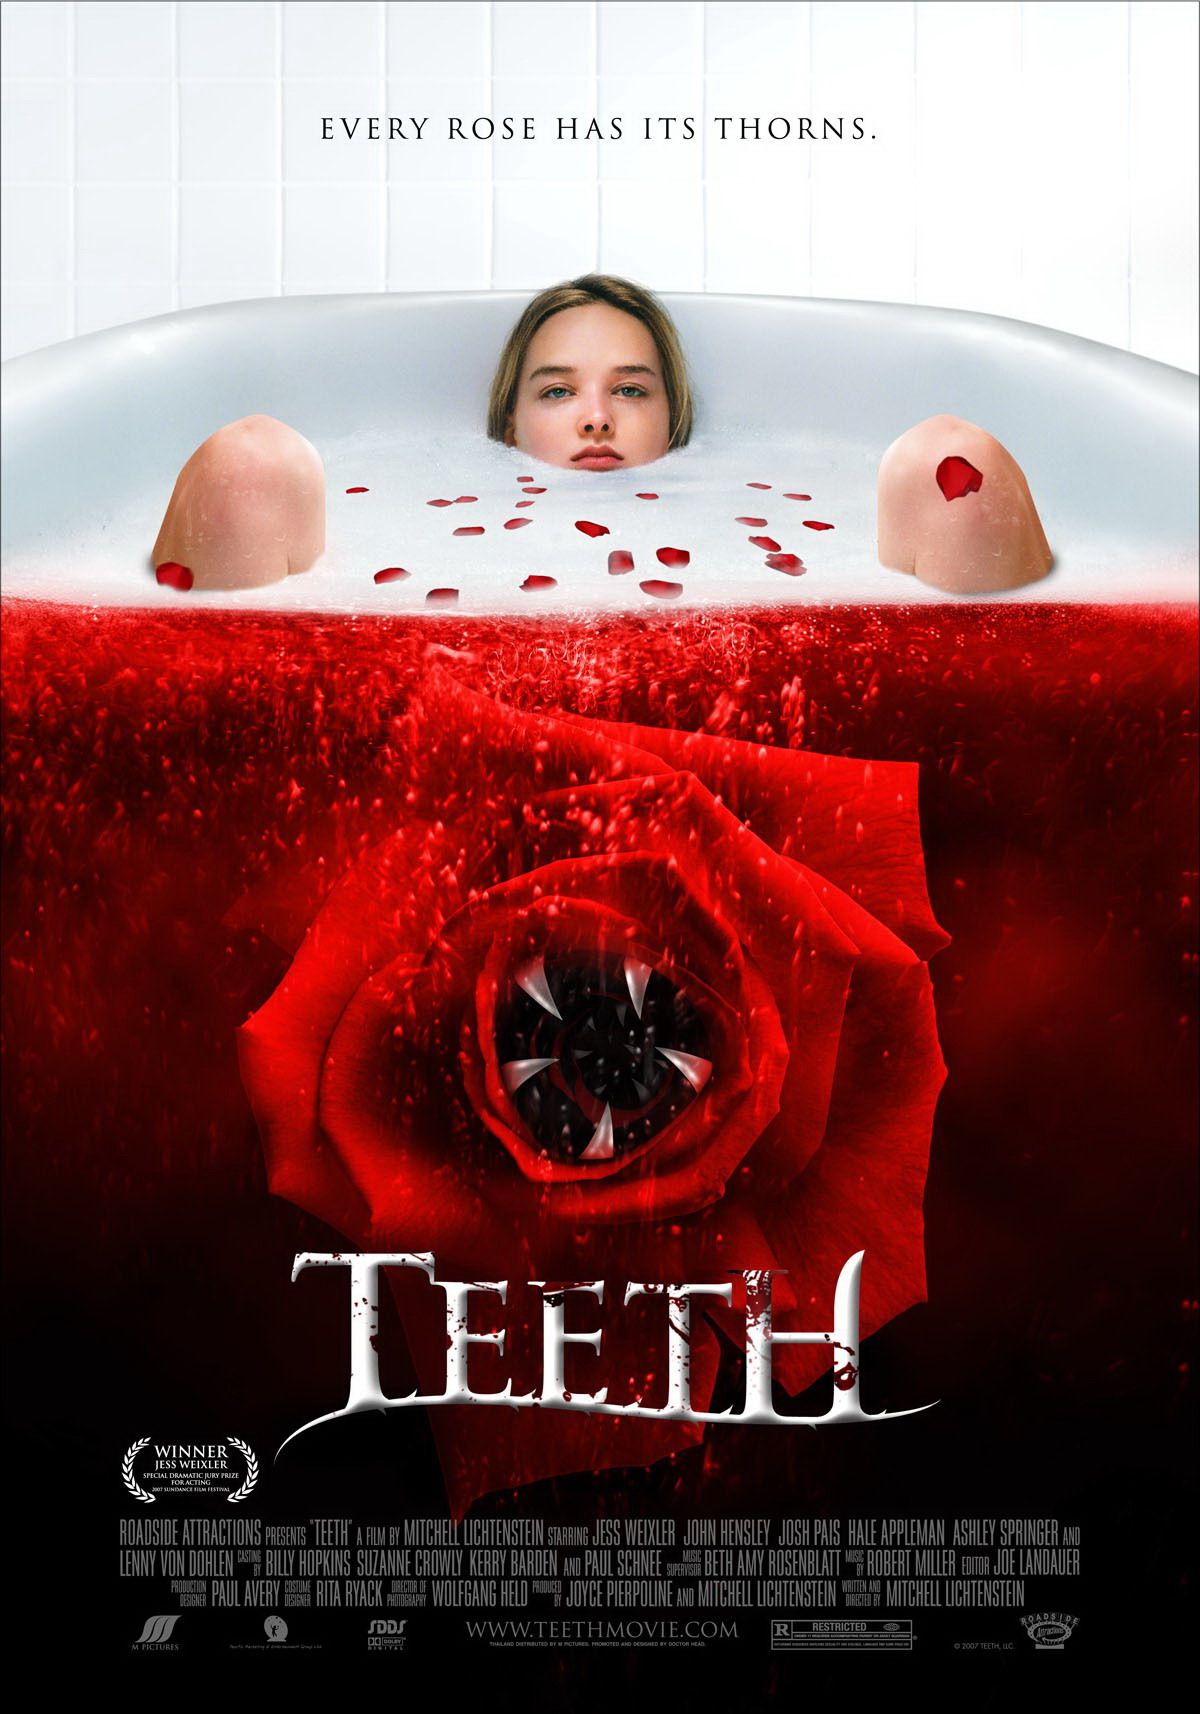 teeth 2 movie wiki